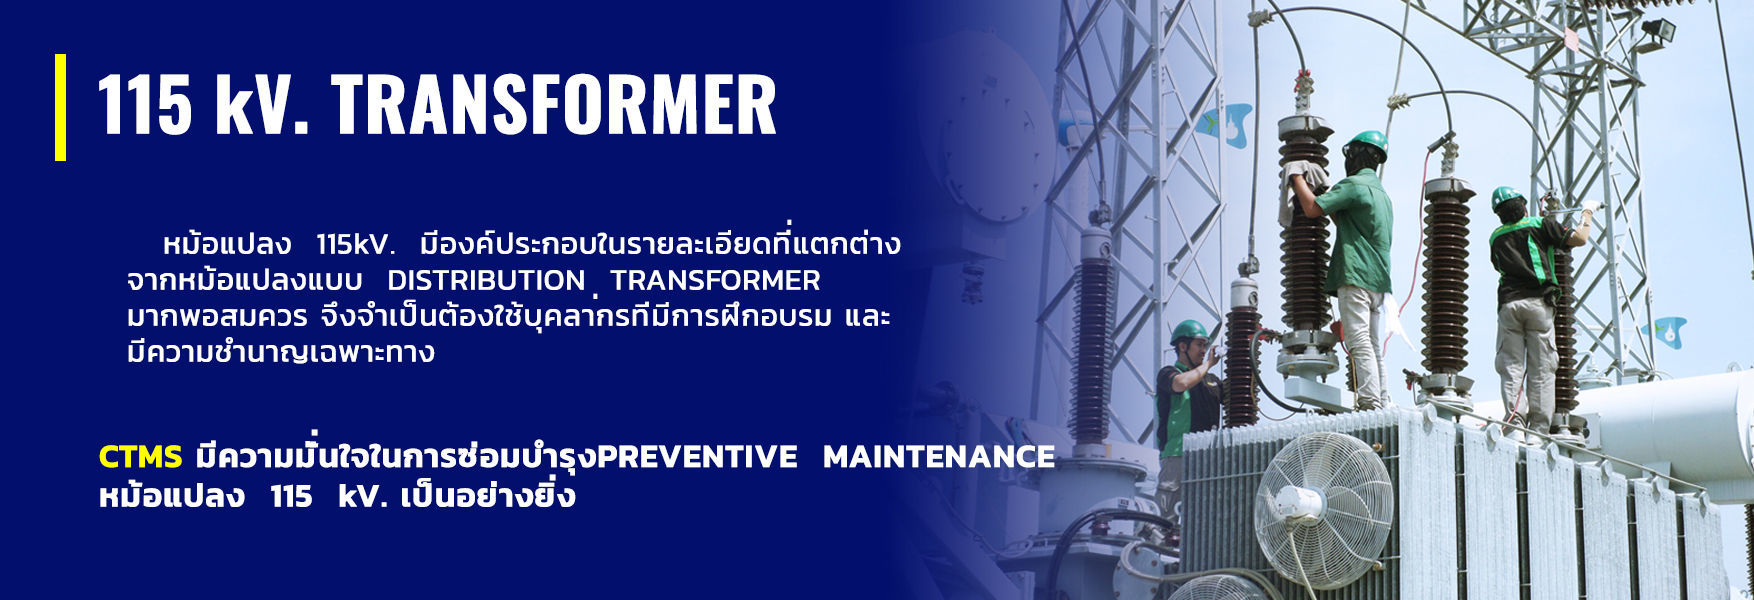 115 kV. Transformer , บำรุงรักษาหม้อแปลง 115 kV. , บำรุงรักษาหม้อแปลงแรงสูง 